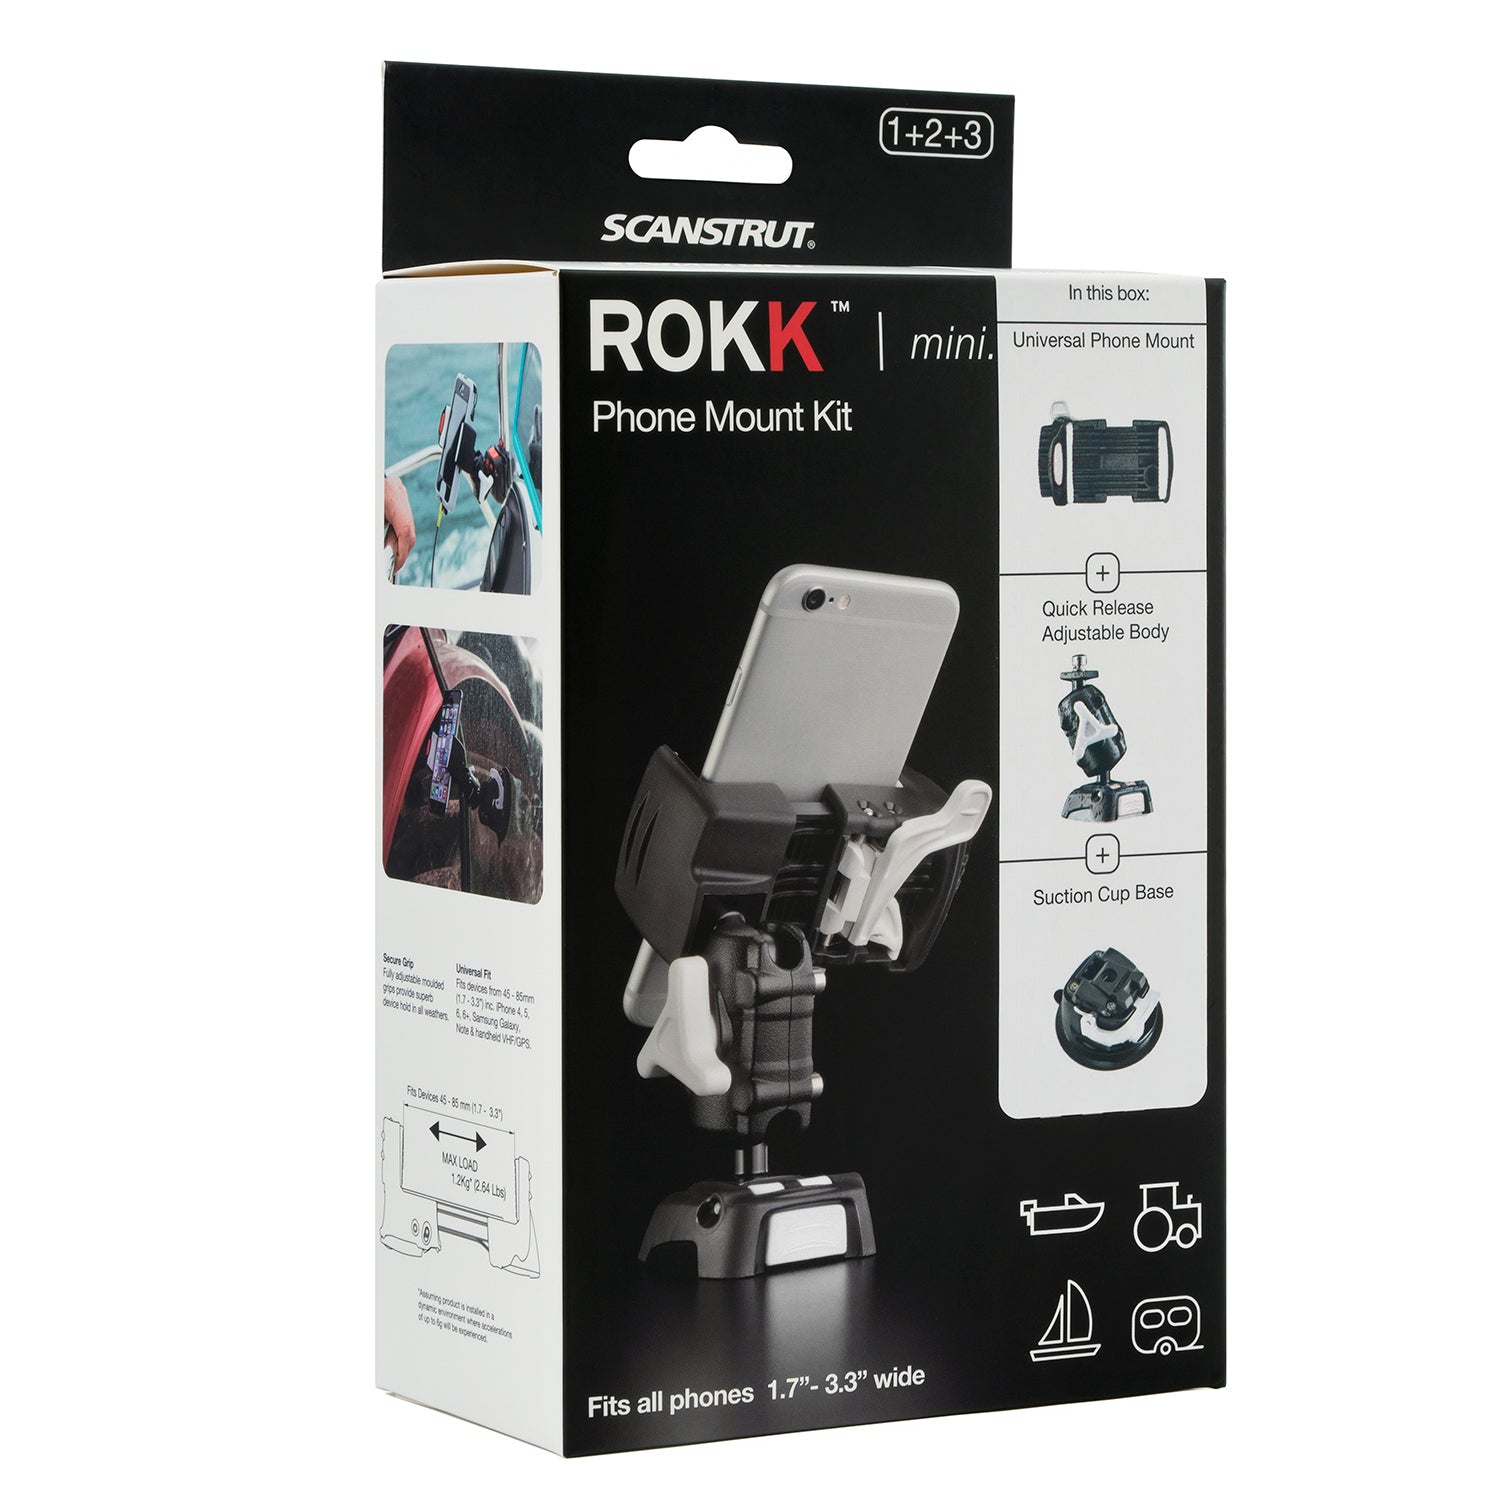 ROKK-Ladung + wasserdichte Dual-USB-Ladesteckdose 12V / 24V – ROKK